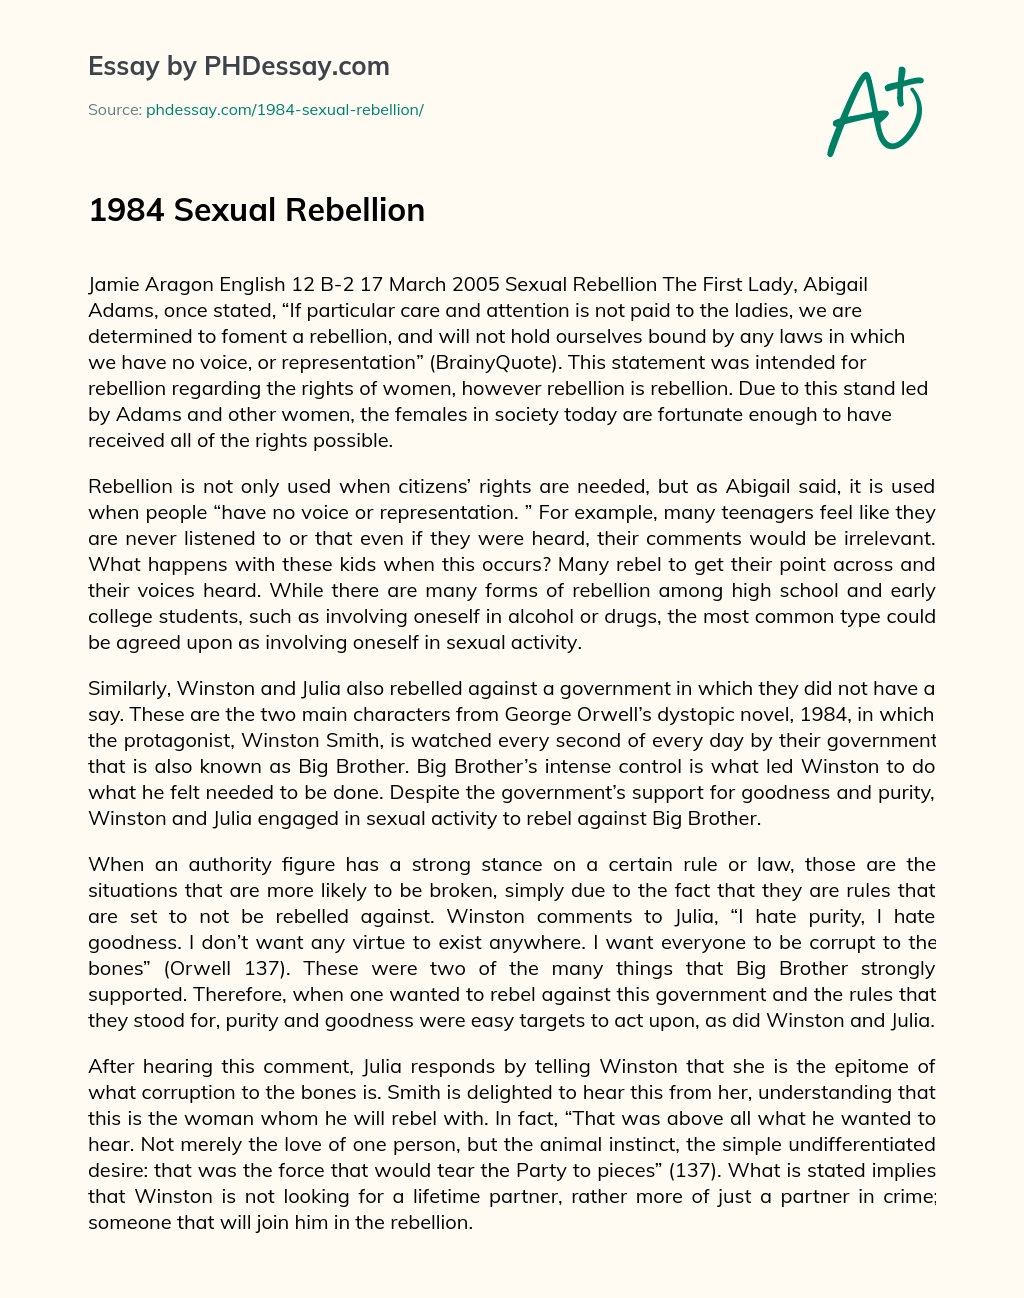 1984 Sexual Rebellion essay